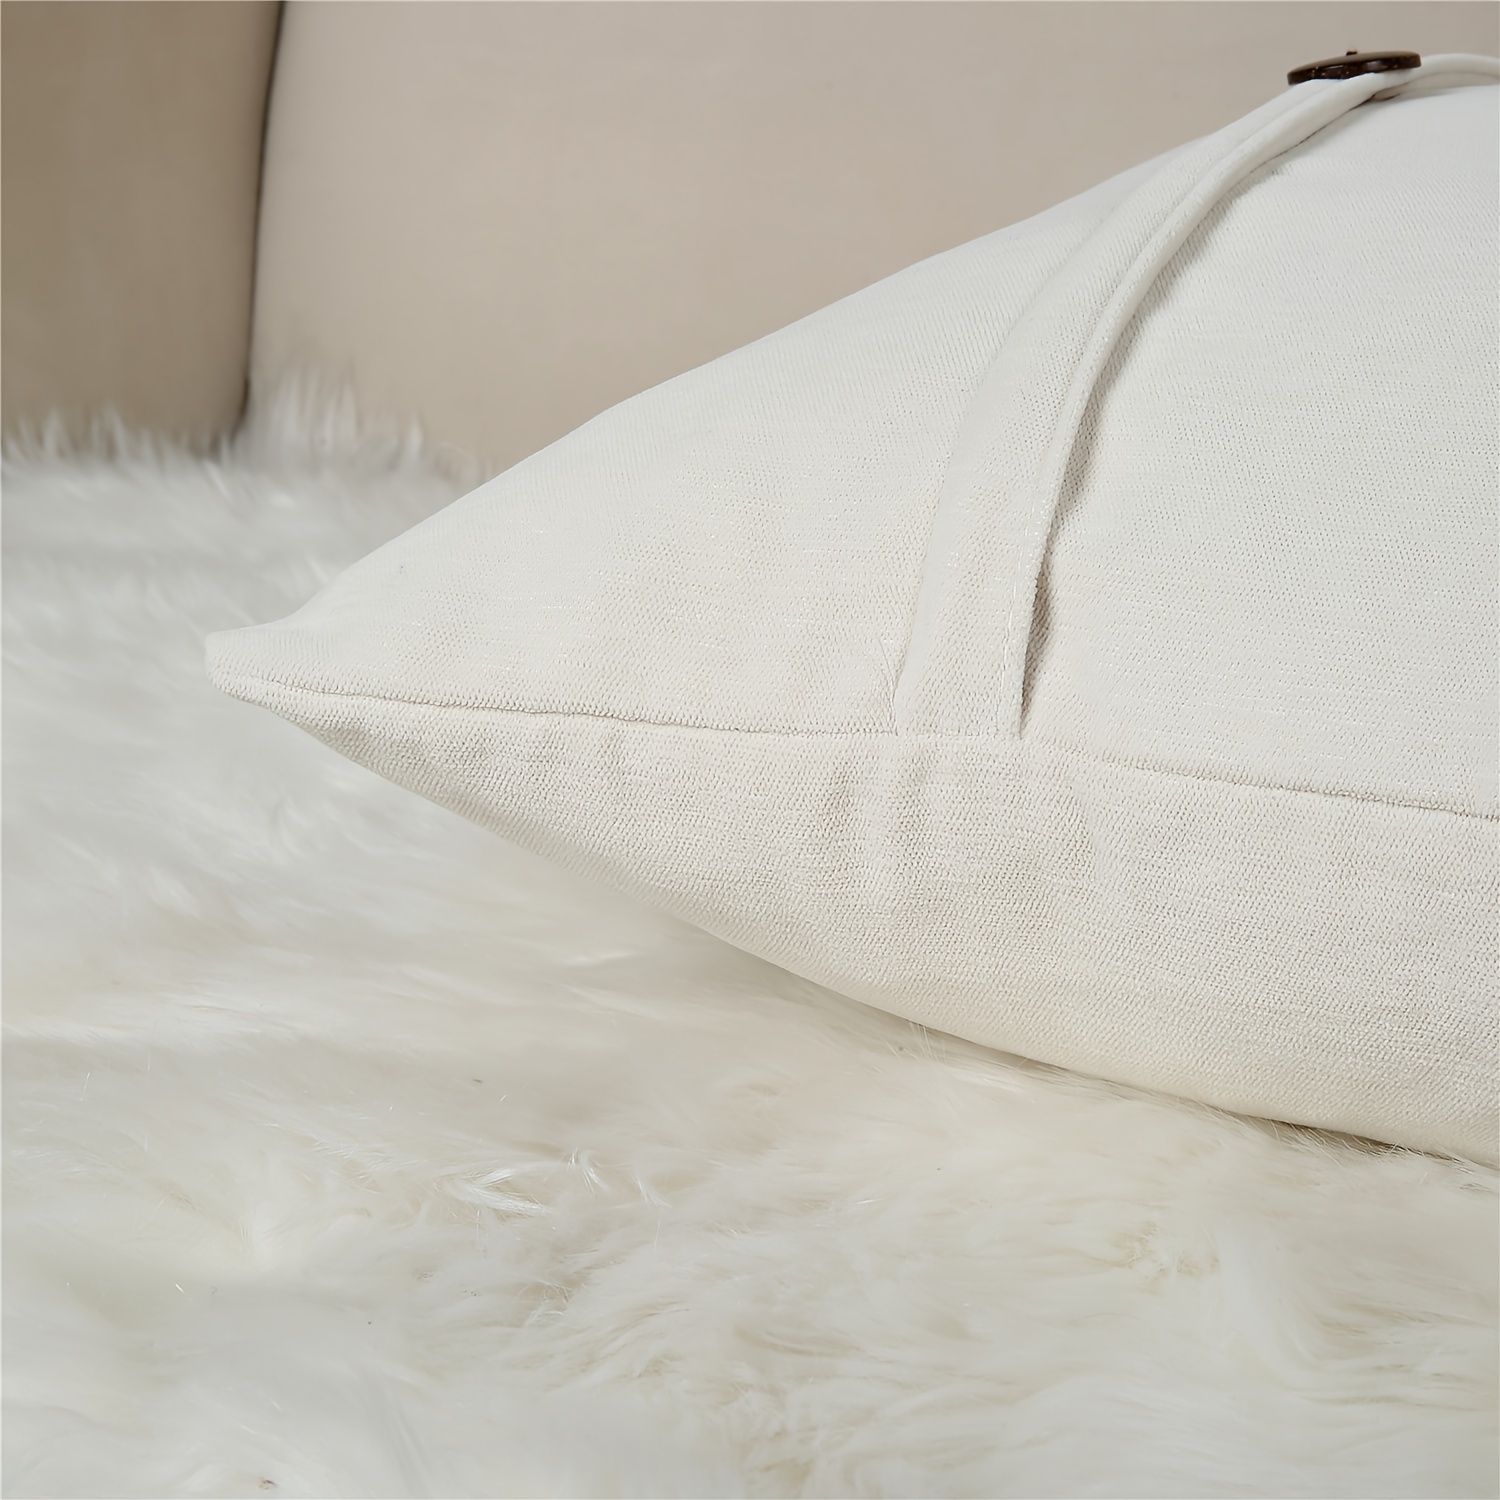 1pc White Bedding Pillow, Minimalist Pillow Insert, For Bedroom